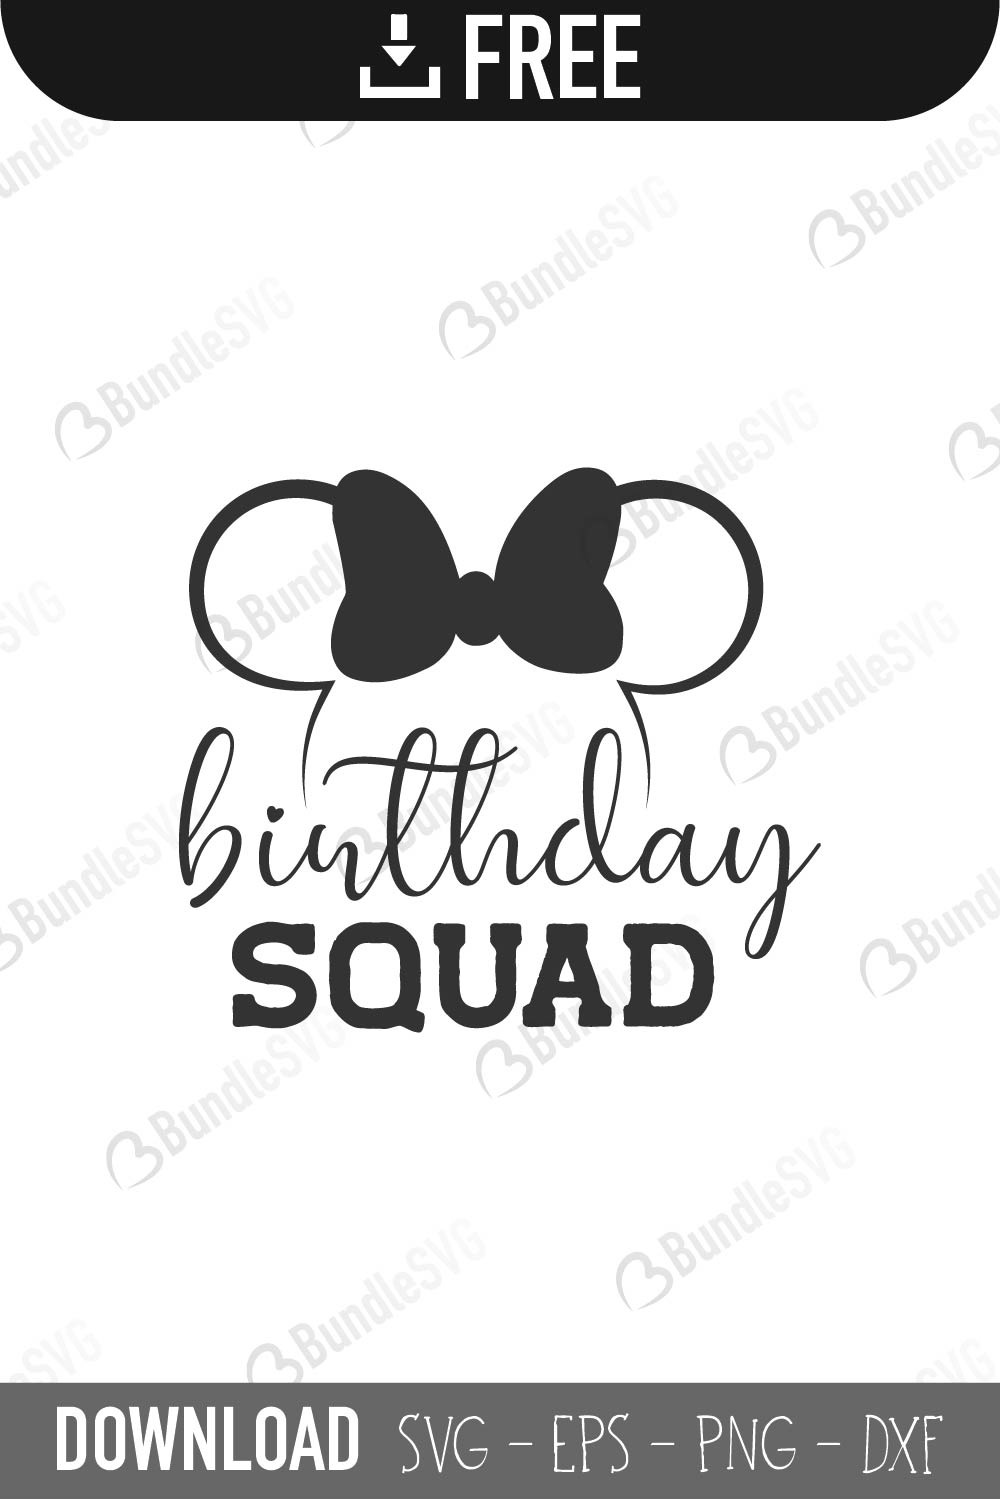 Download Birthday Squad Svg Cut Files Free Download Bundlesvg